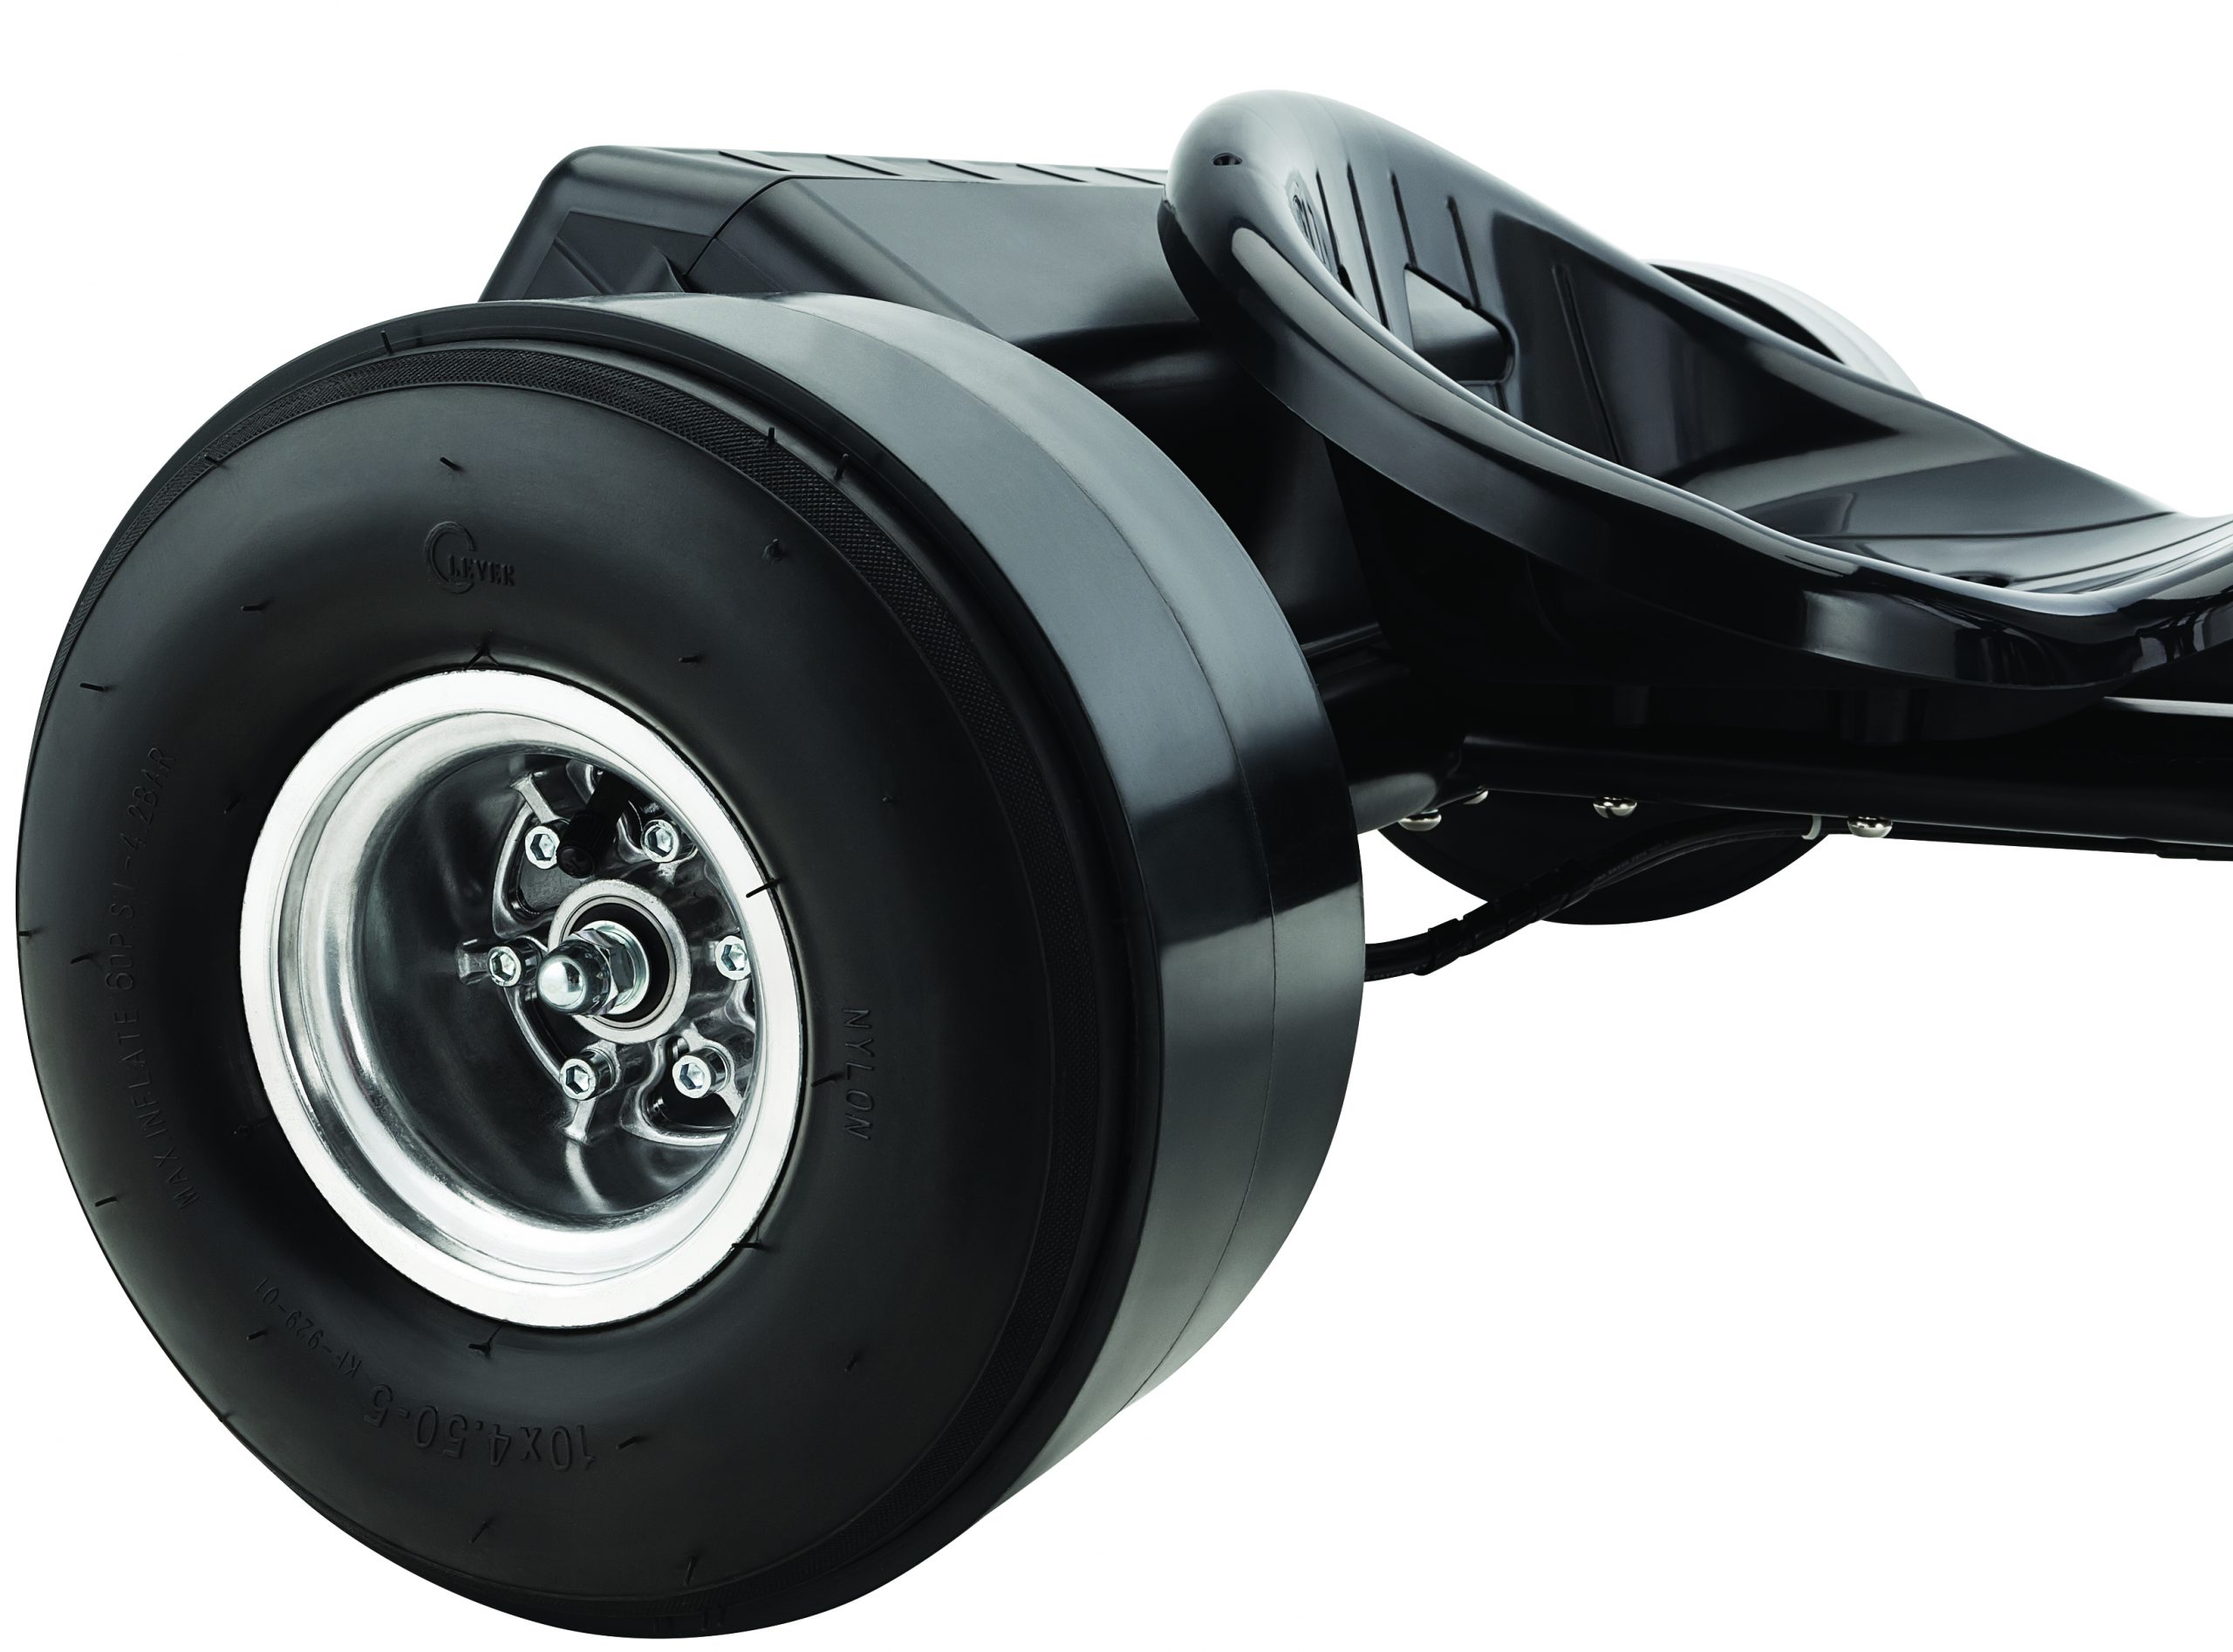 Razor DXT Drift Trike for sale online 